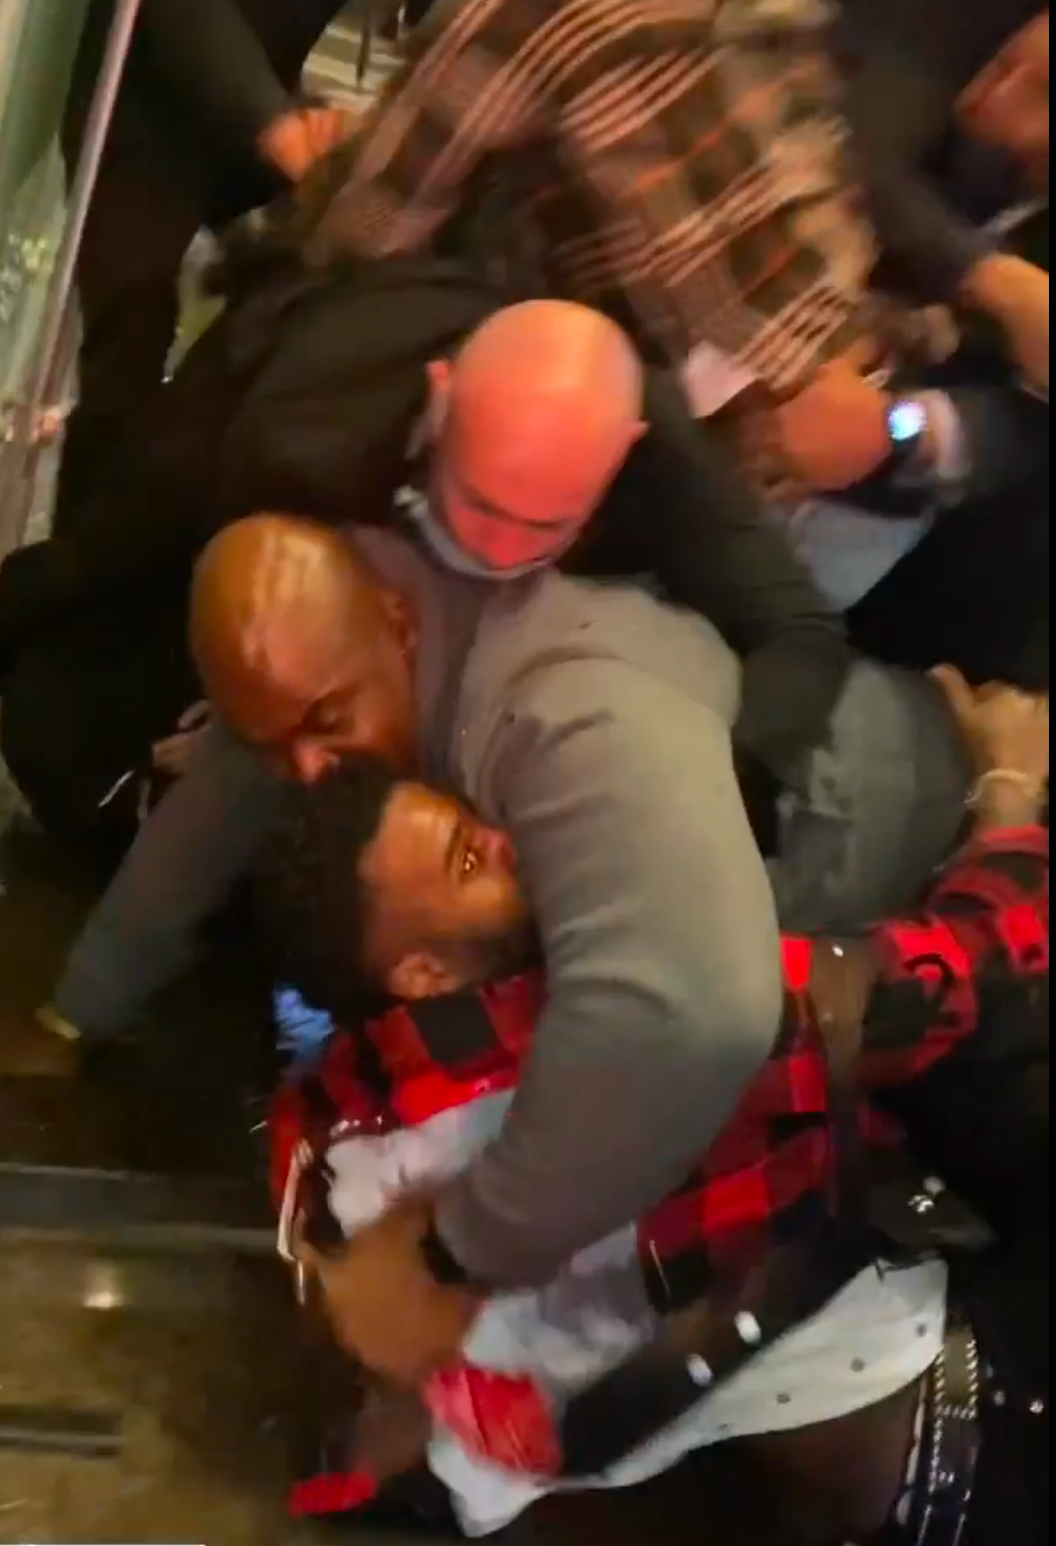 Jason Derulo Handcuffed By Police Following Massive Brawl In Las Vegas